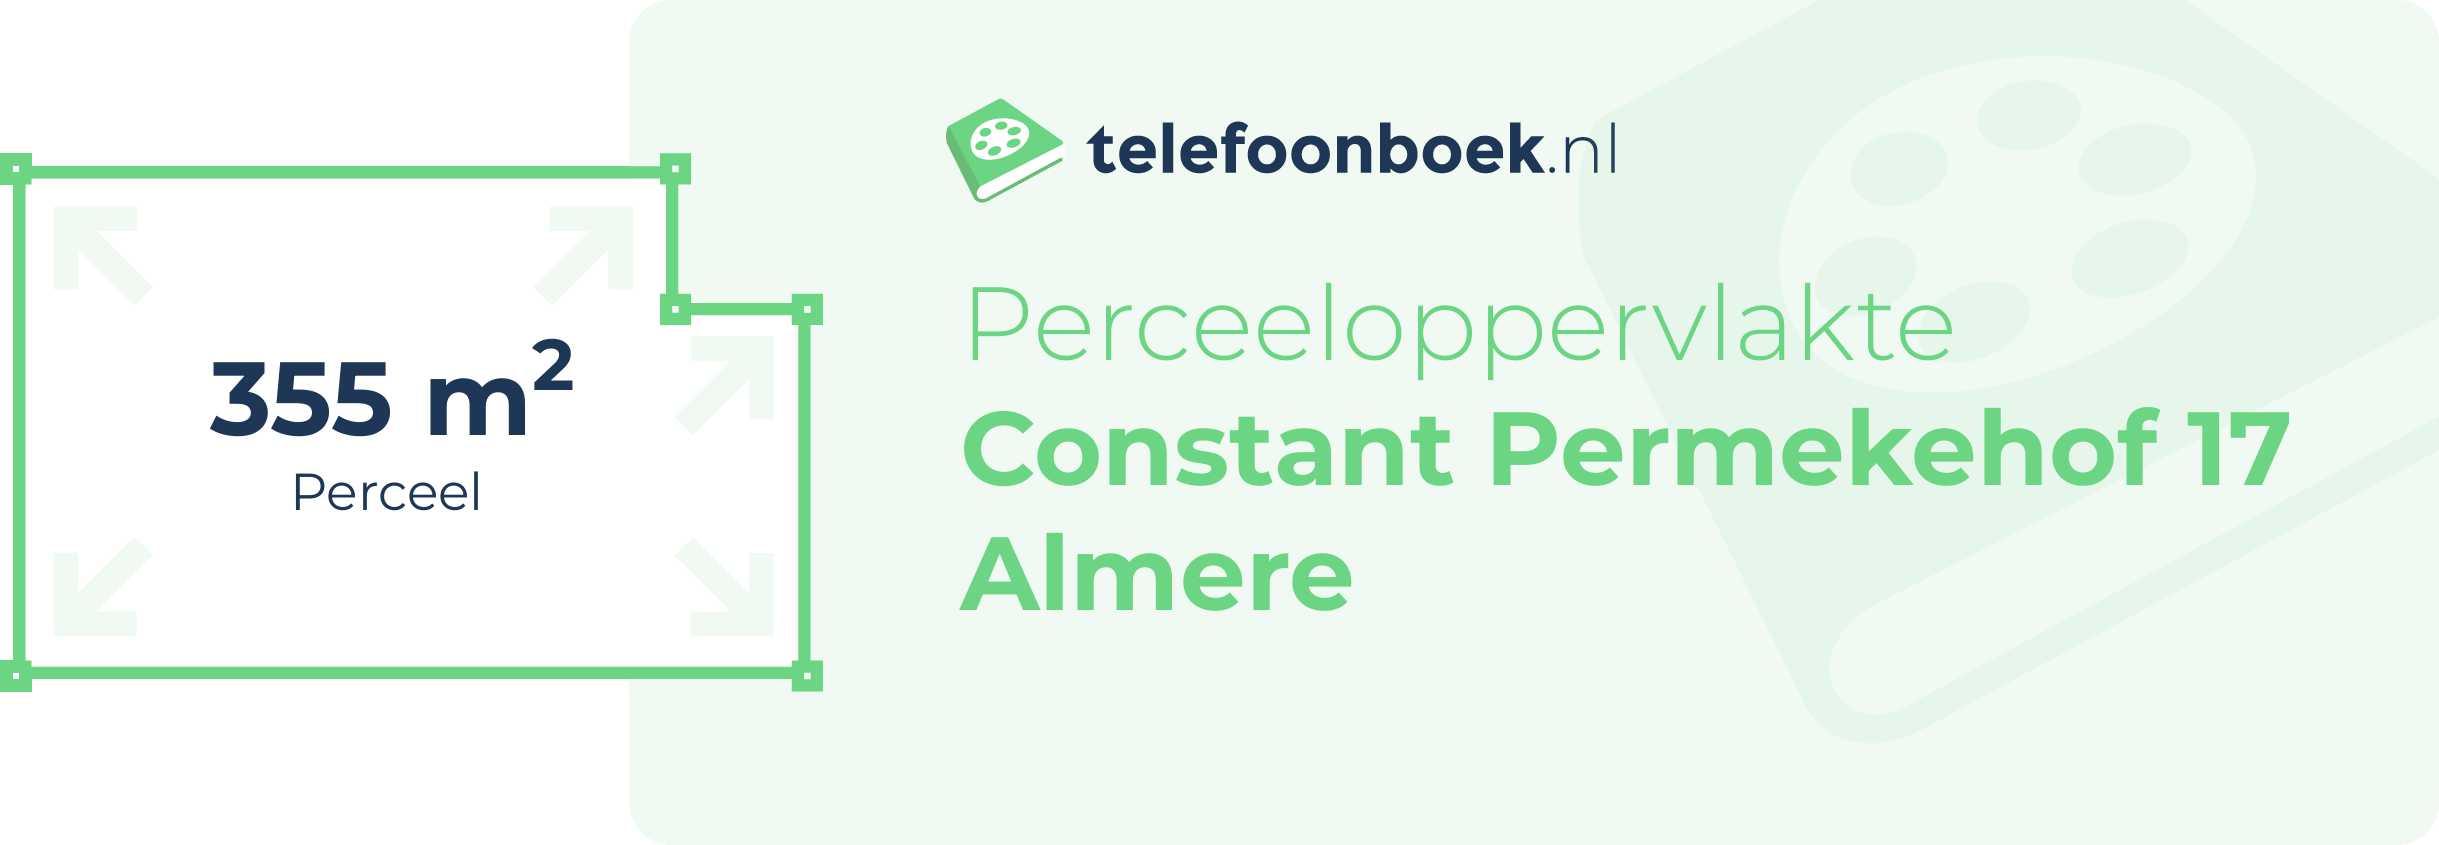 Perceeloppervlakte Constant Permekehof 17 Almere